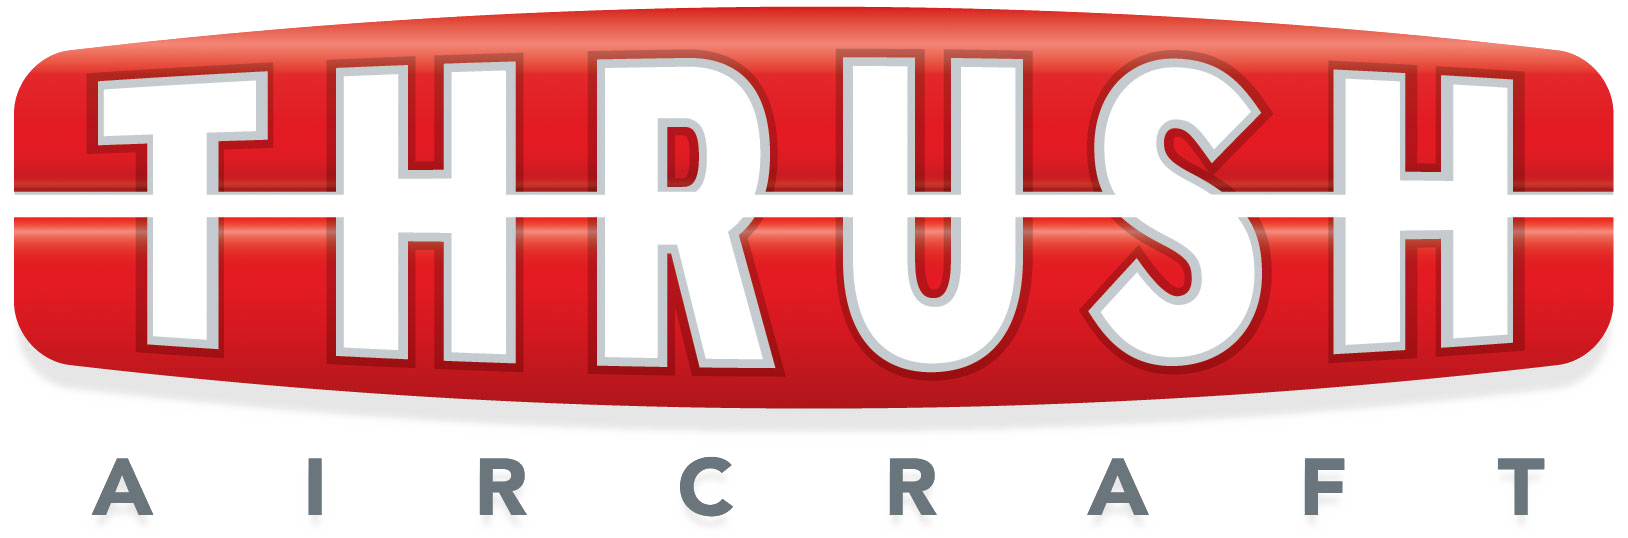 Thrush_logo_RGBA